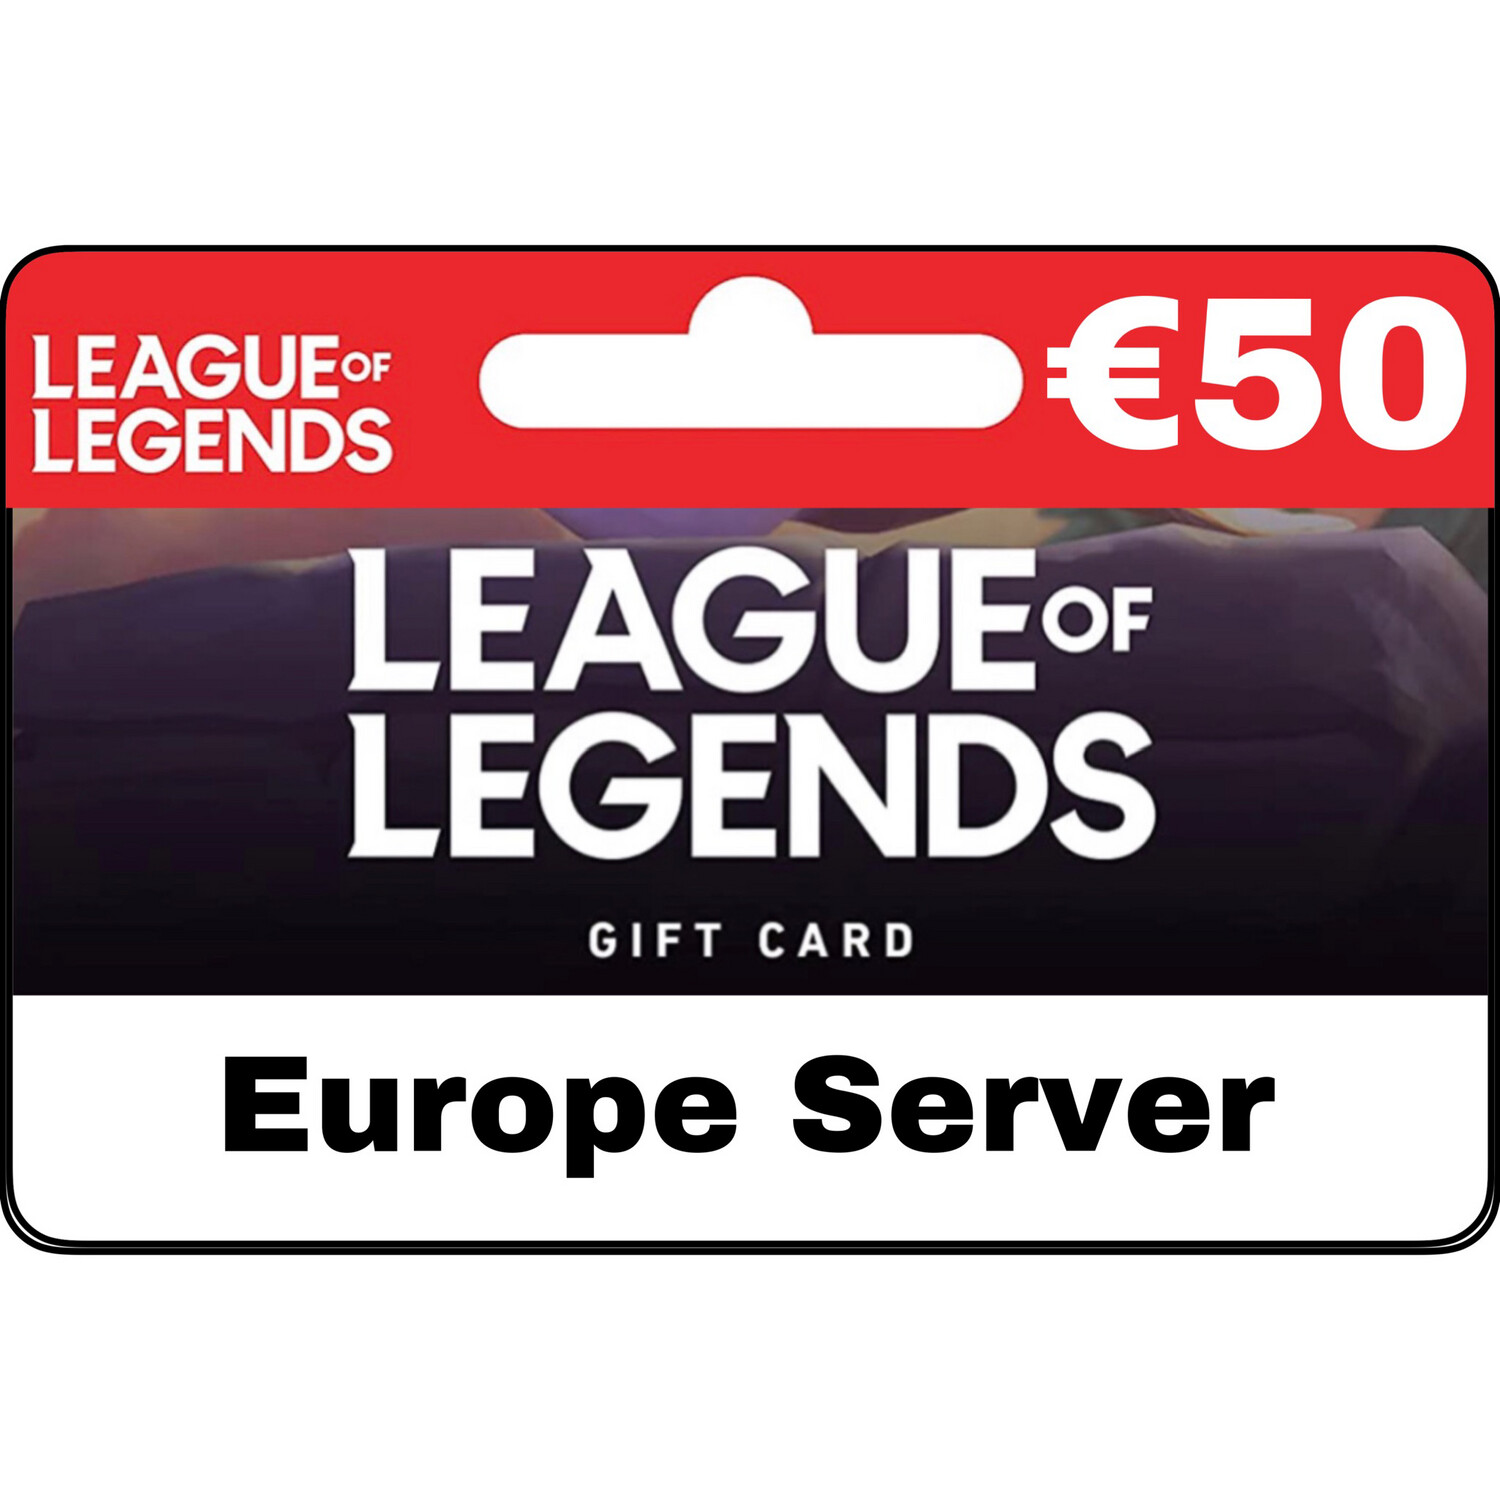 League of Legends EUR €50 Europe Server Gift Card